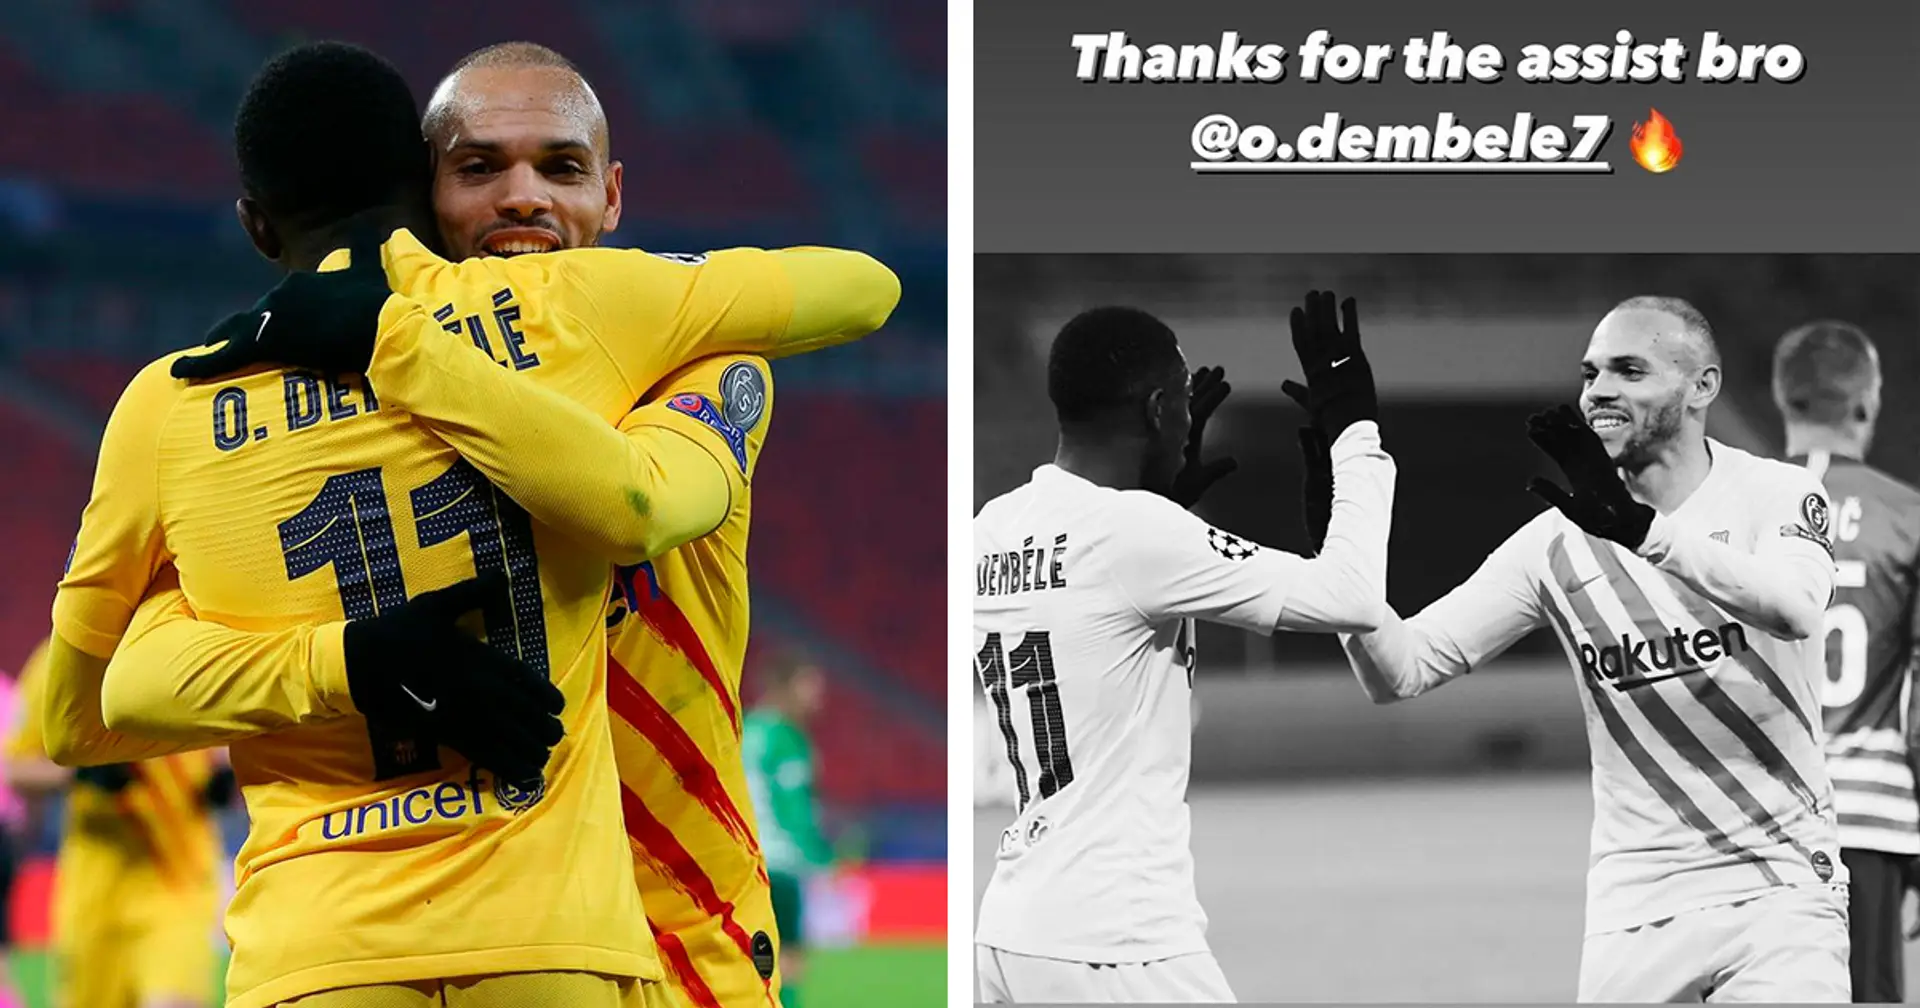 'Thanks for the assist bro': Braithwaite goes to Instagram to thank Dembele for key pass vs Ferencvaros